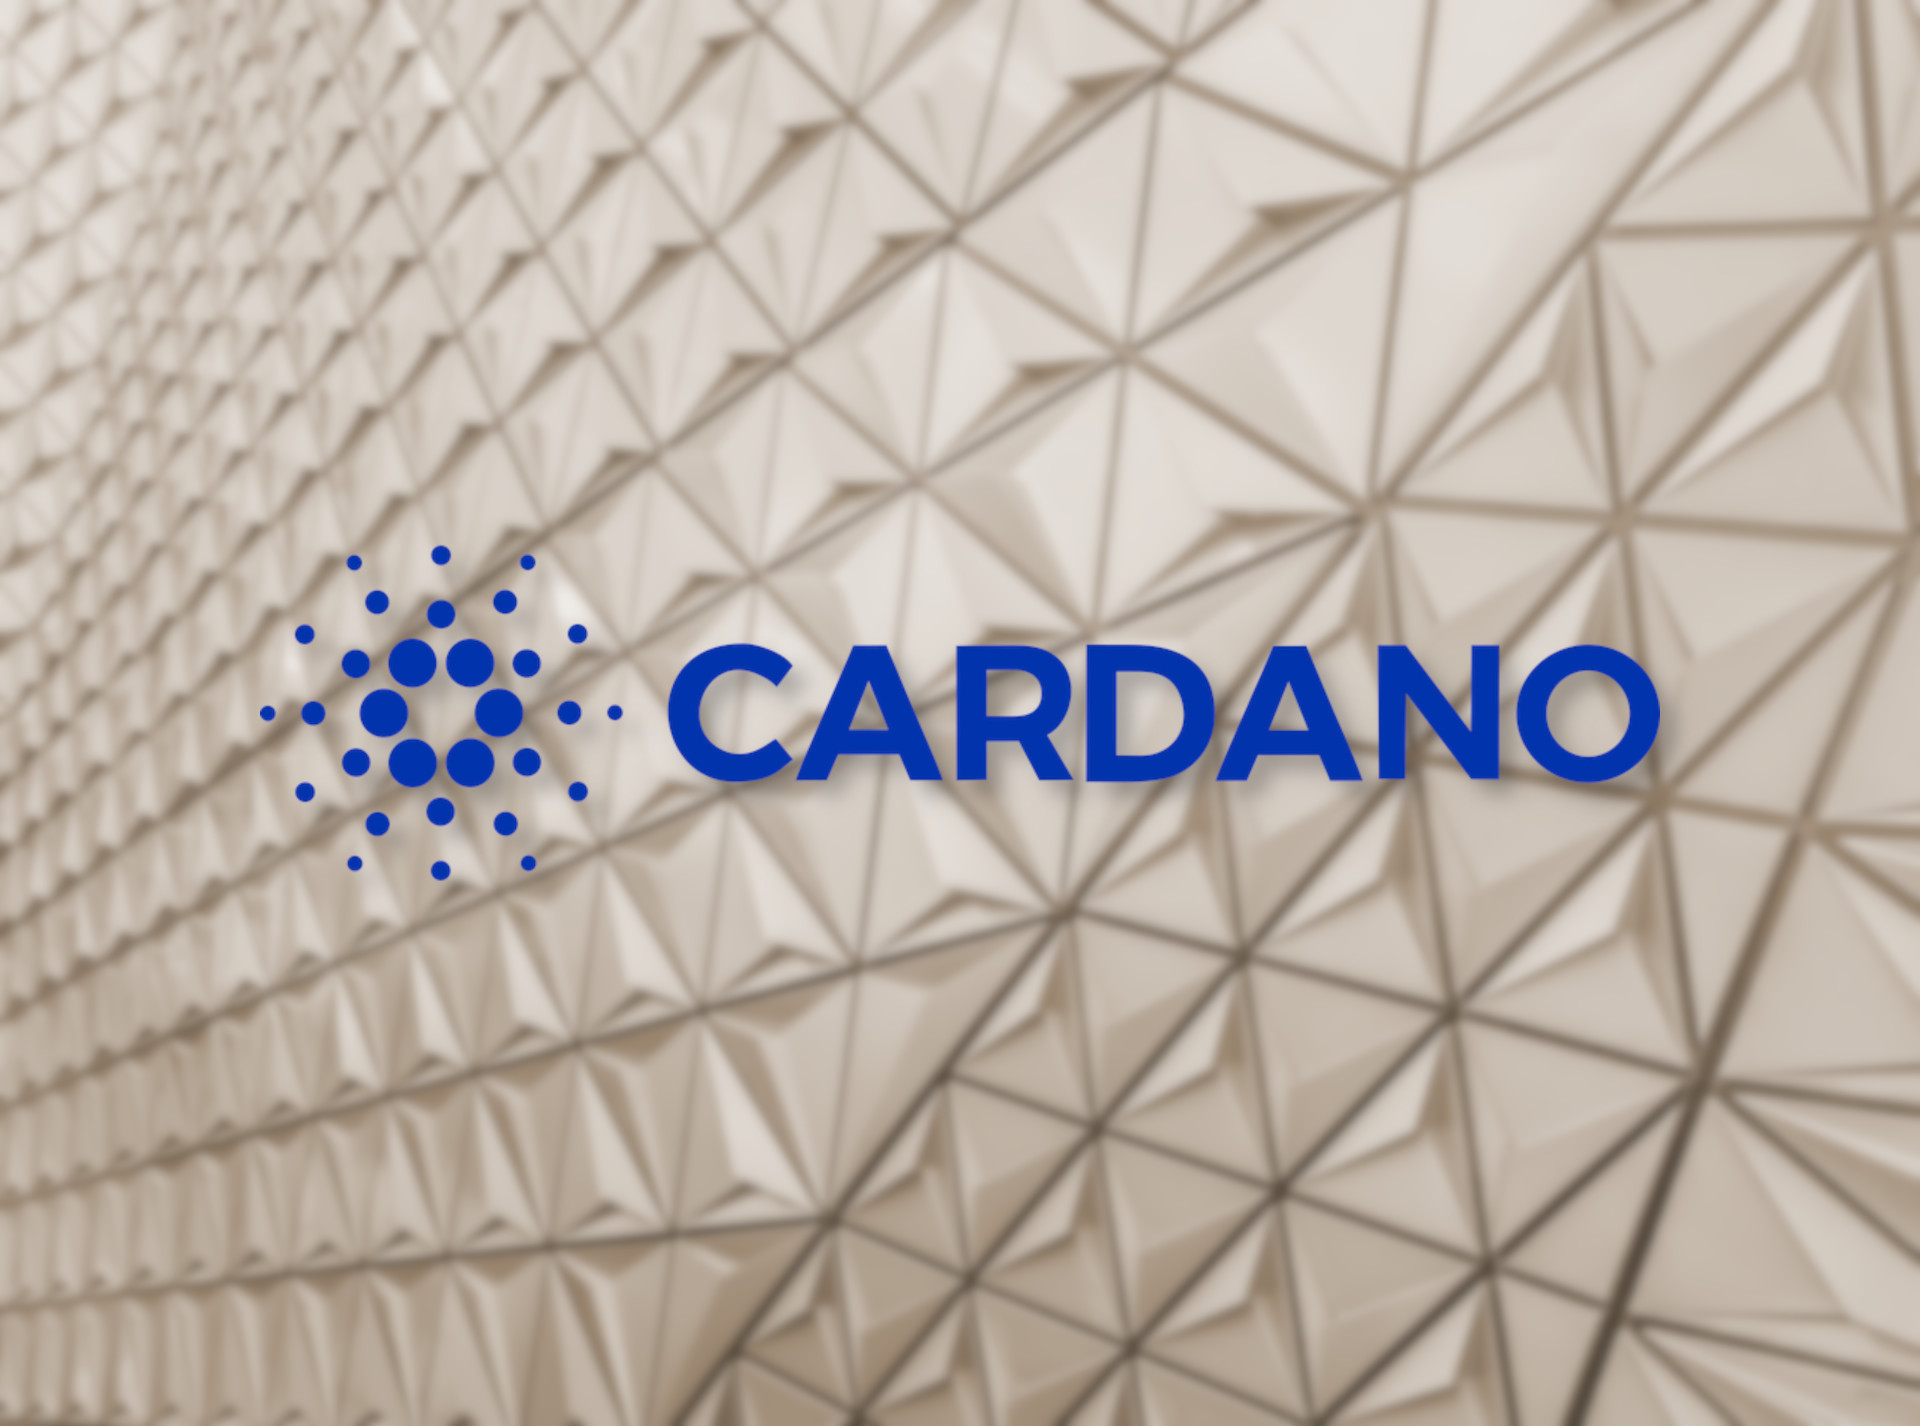 Vasil Hard Fork Confirmed for September 22, Set to Bring Scalability Improvements for Cardano